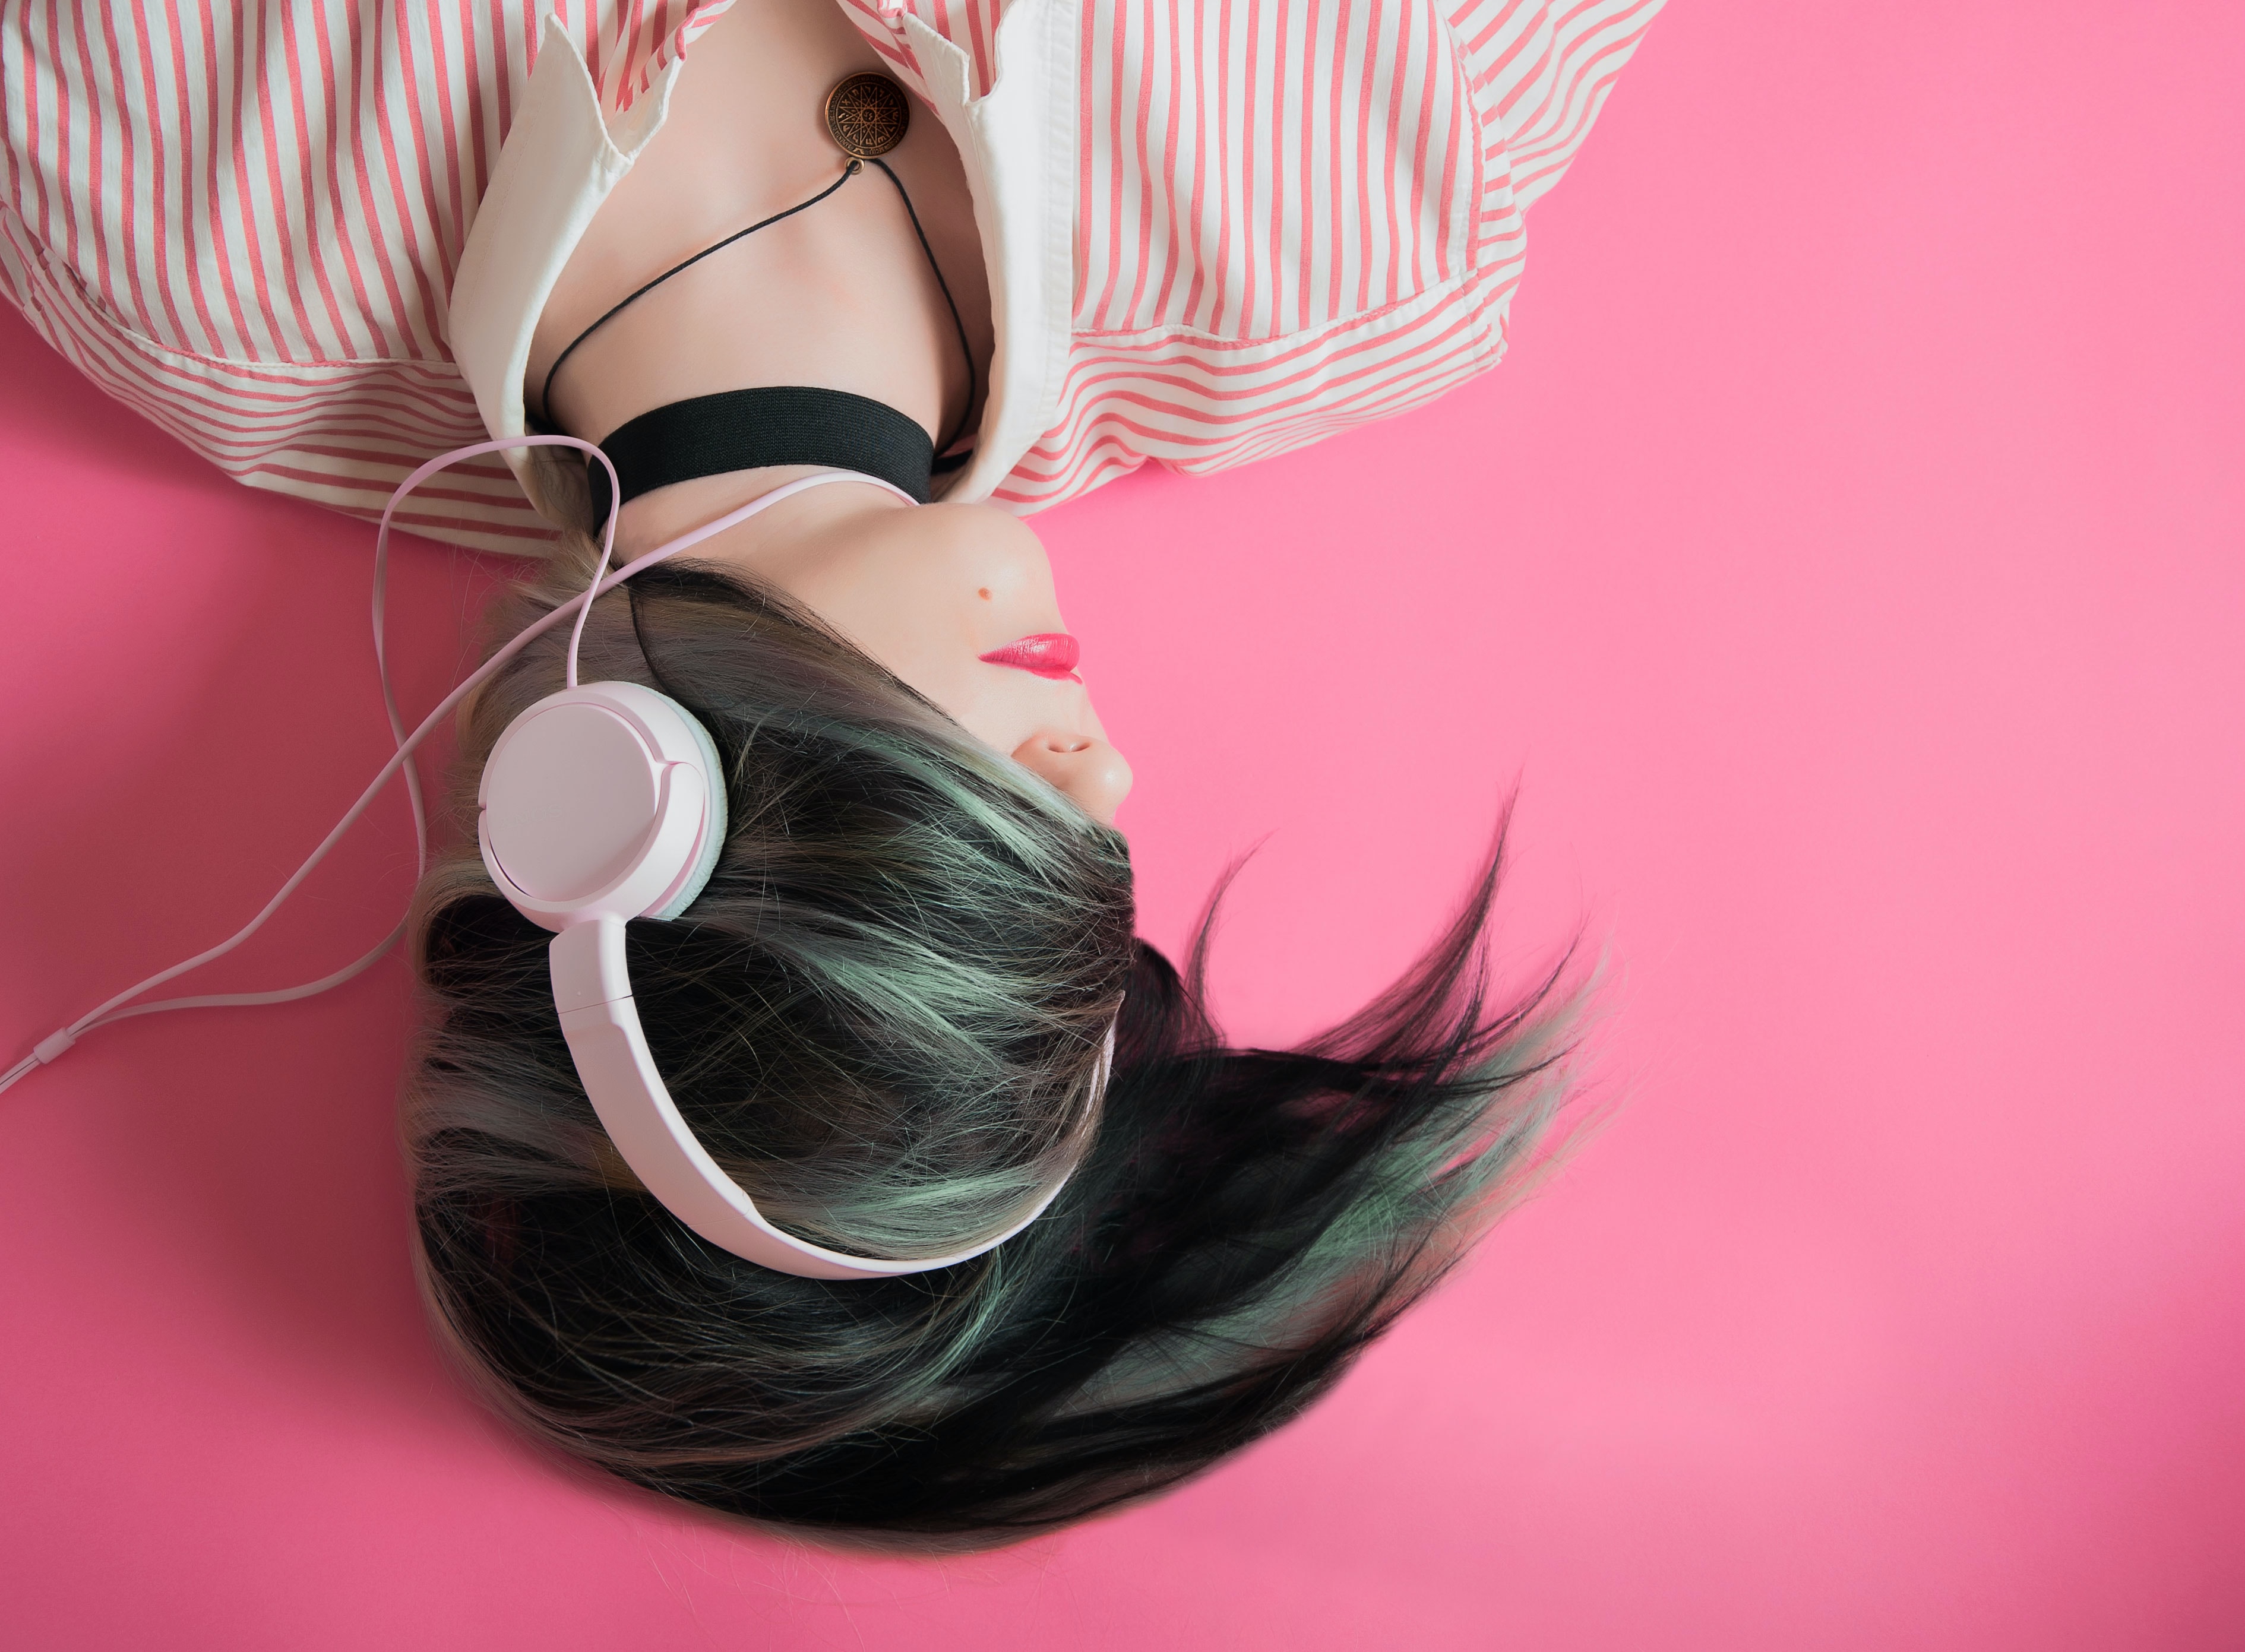 A woman listening to music. | Source: Unsplash